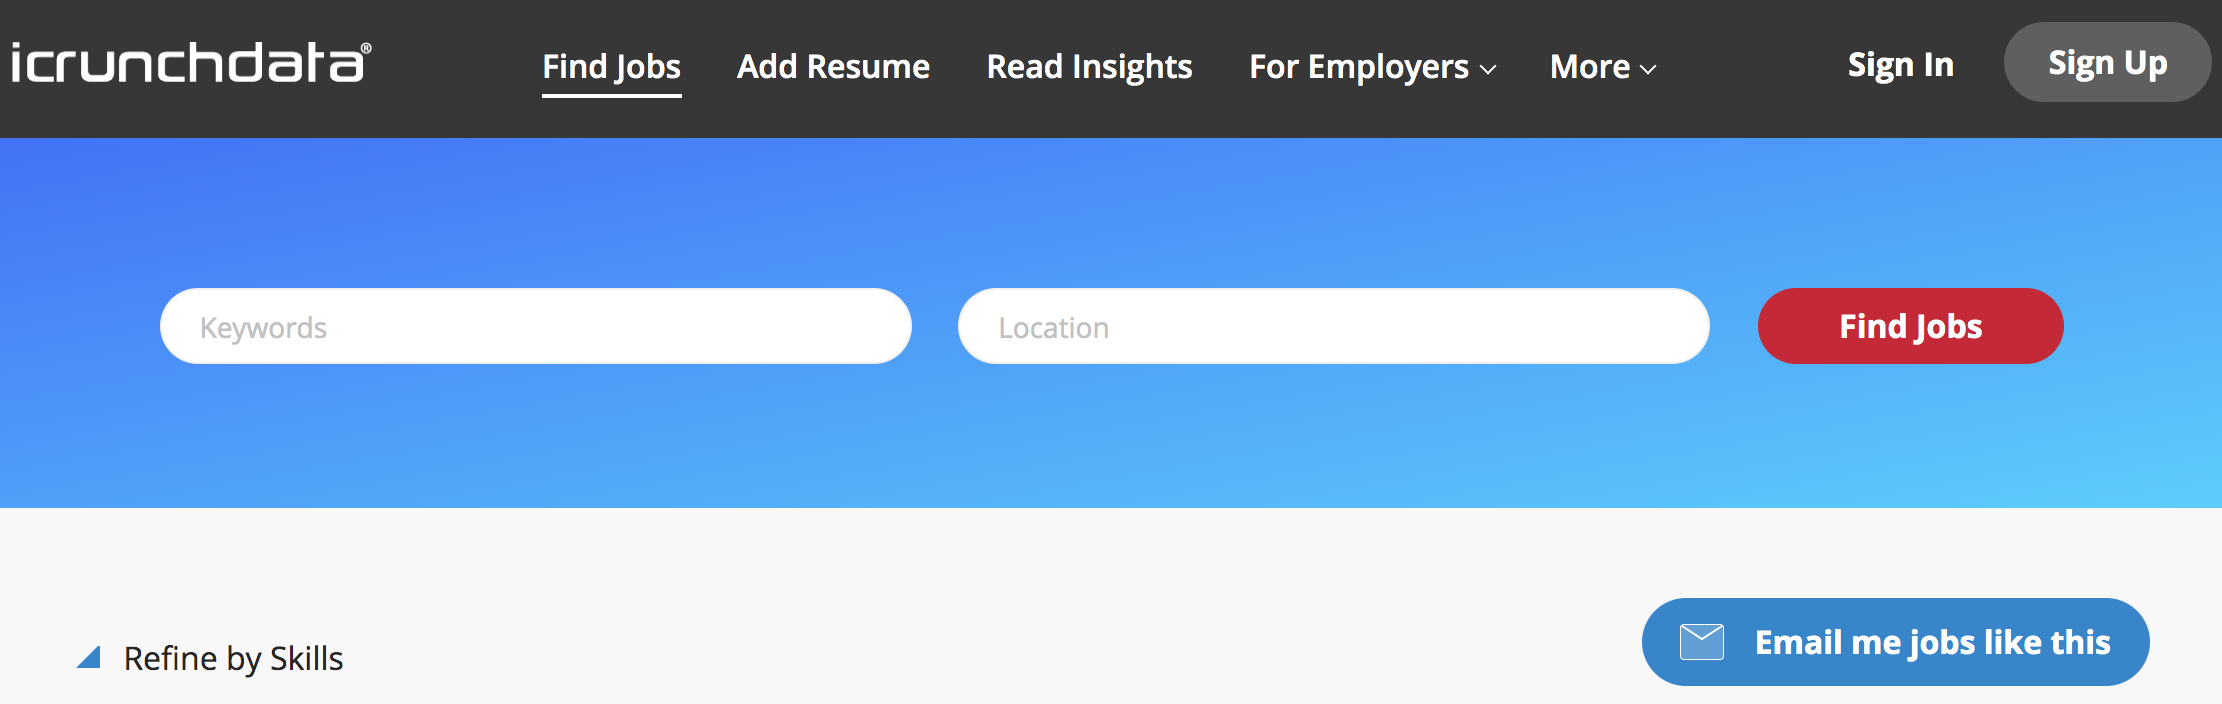 Icrunchdata jobs